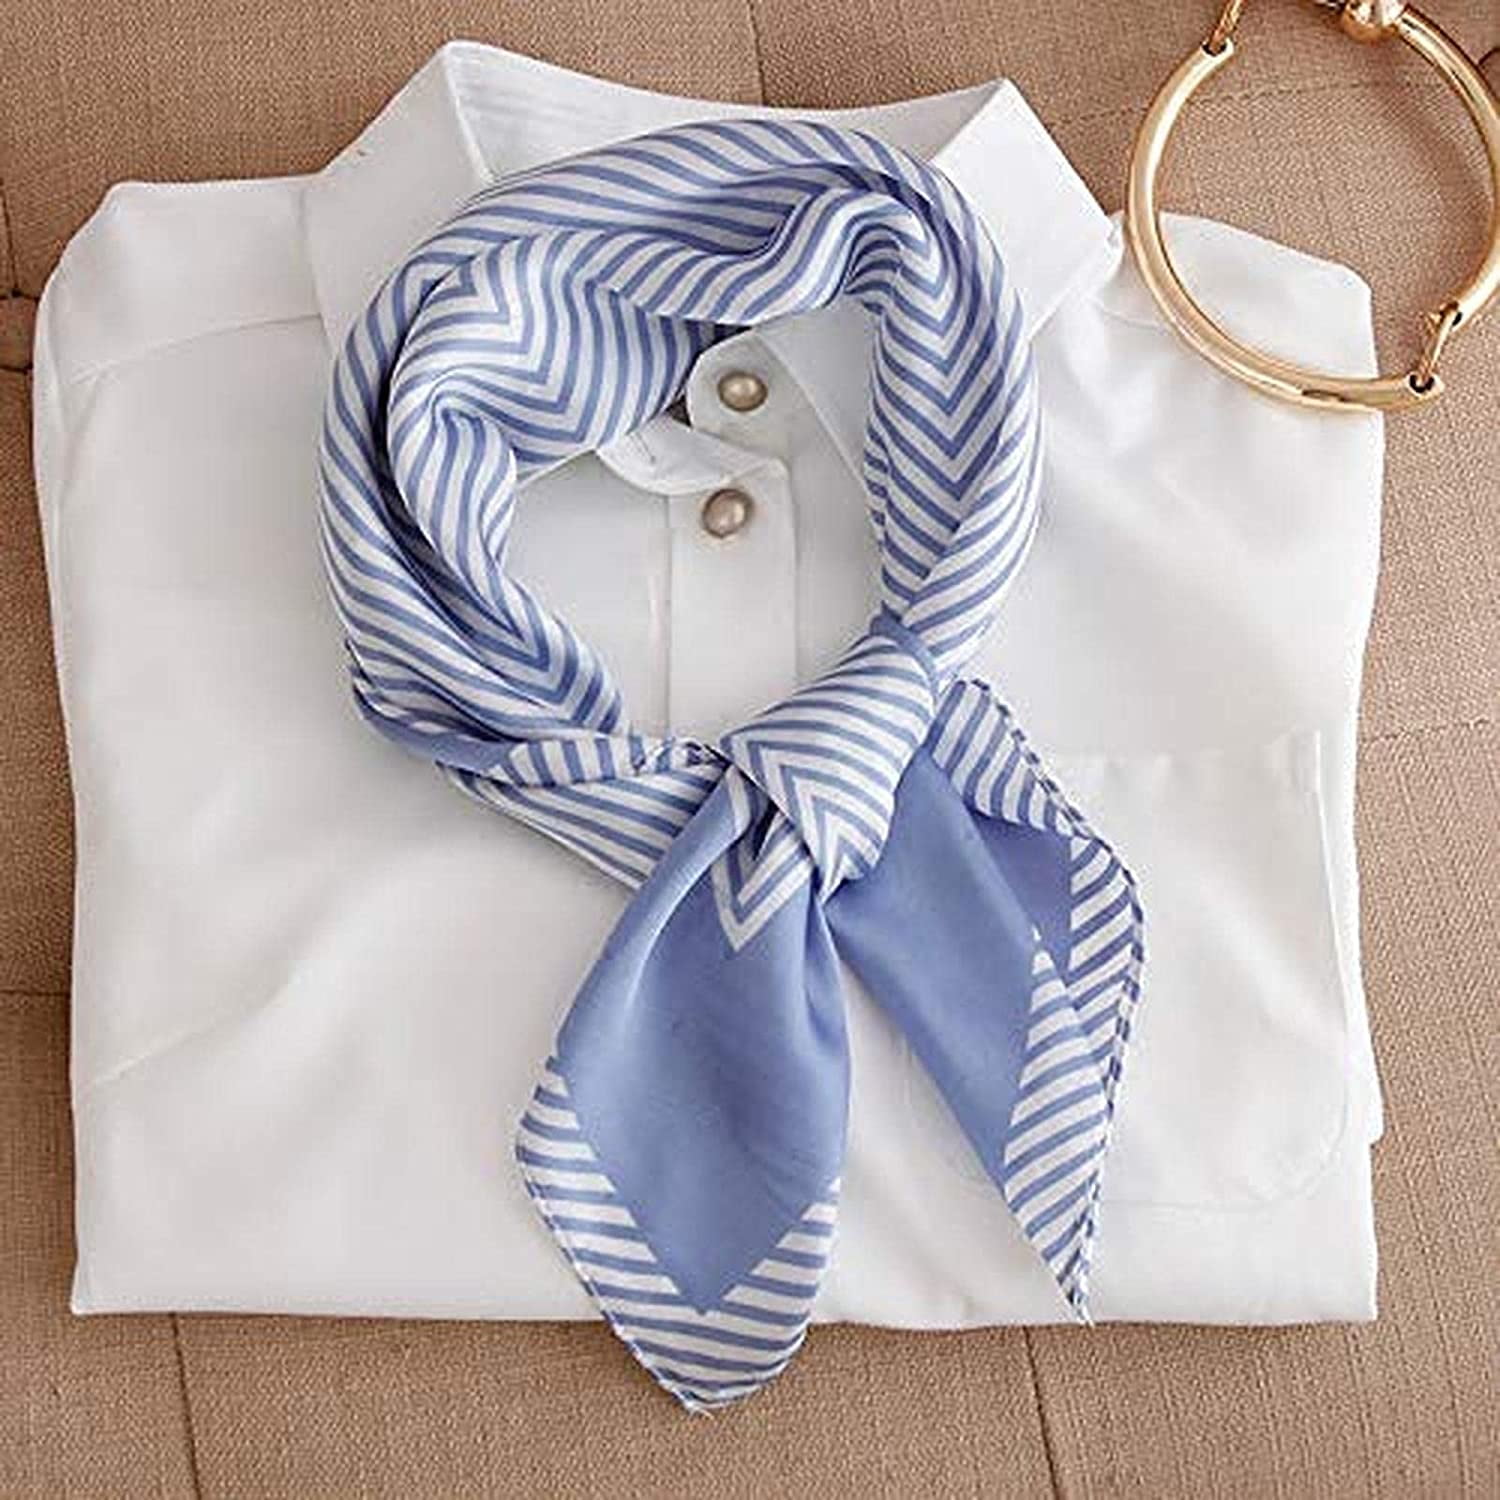 100% Silk 20" Square Scarf Women Wrap neckerchief Bandana white blue QS46-20